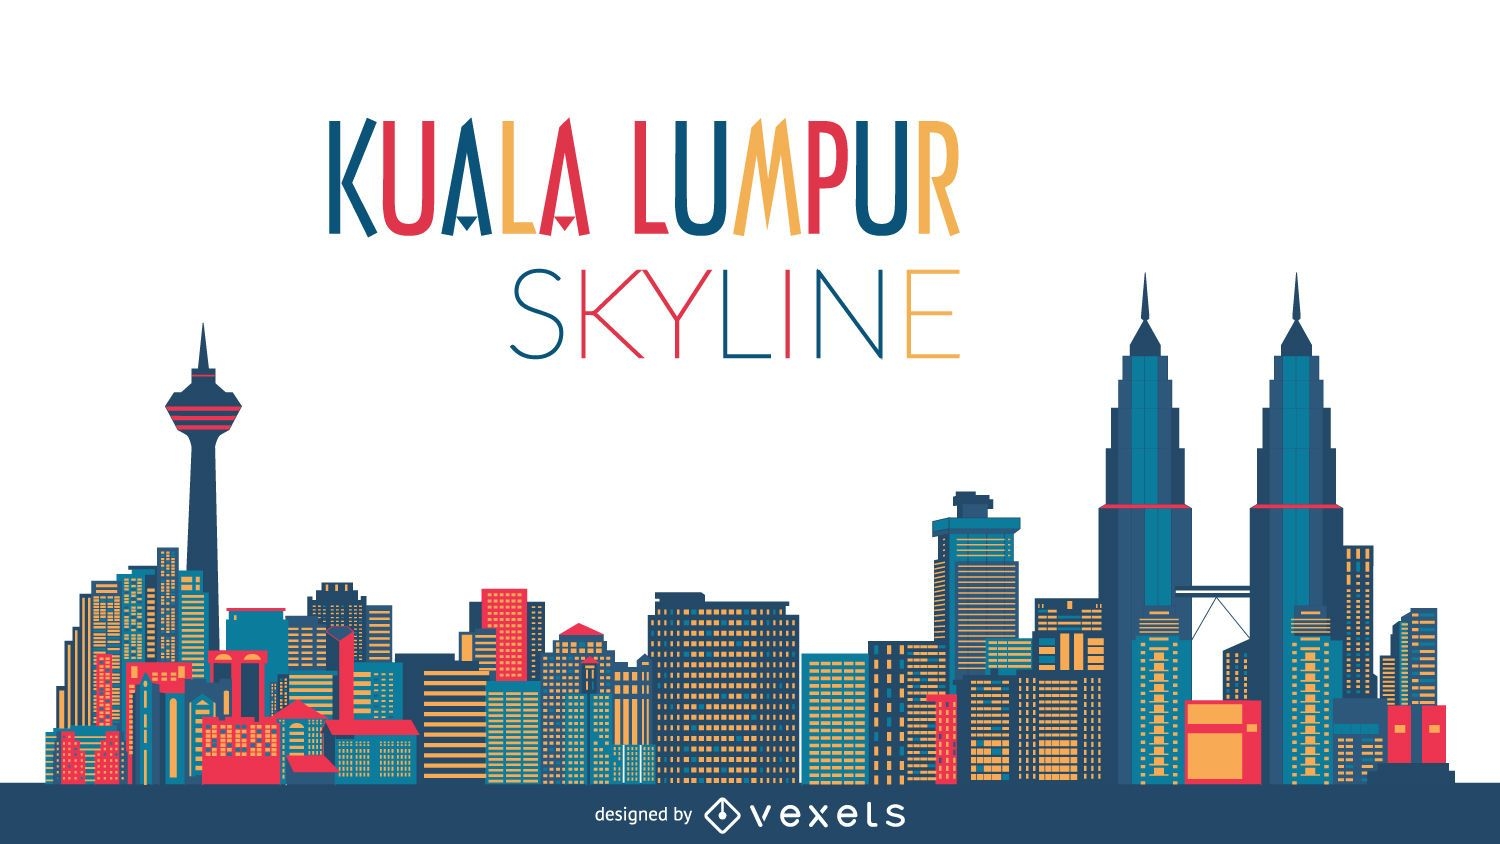 Kuala Lumpur Skyline Illustration